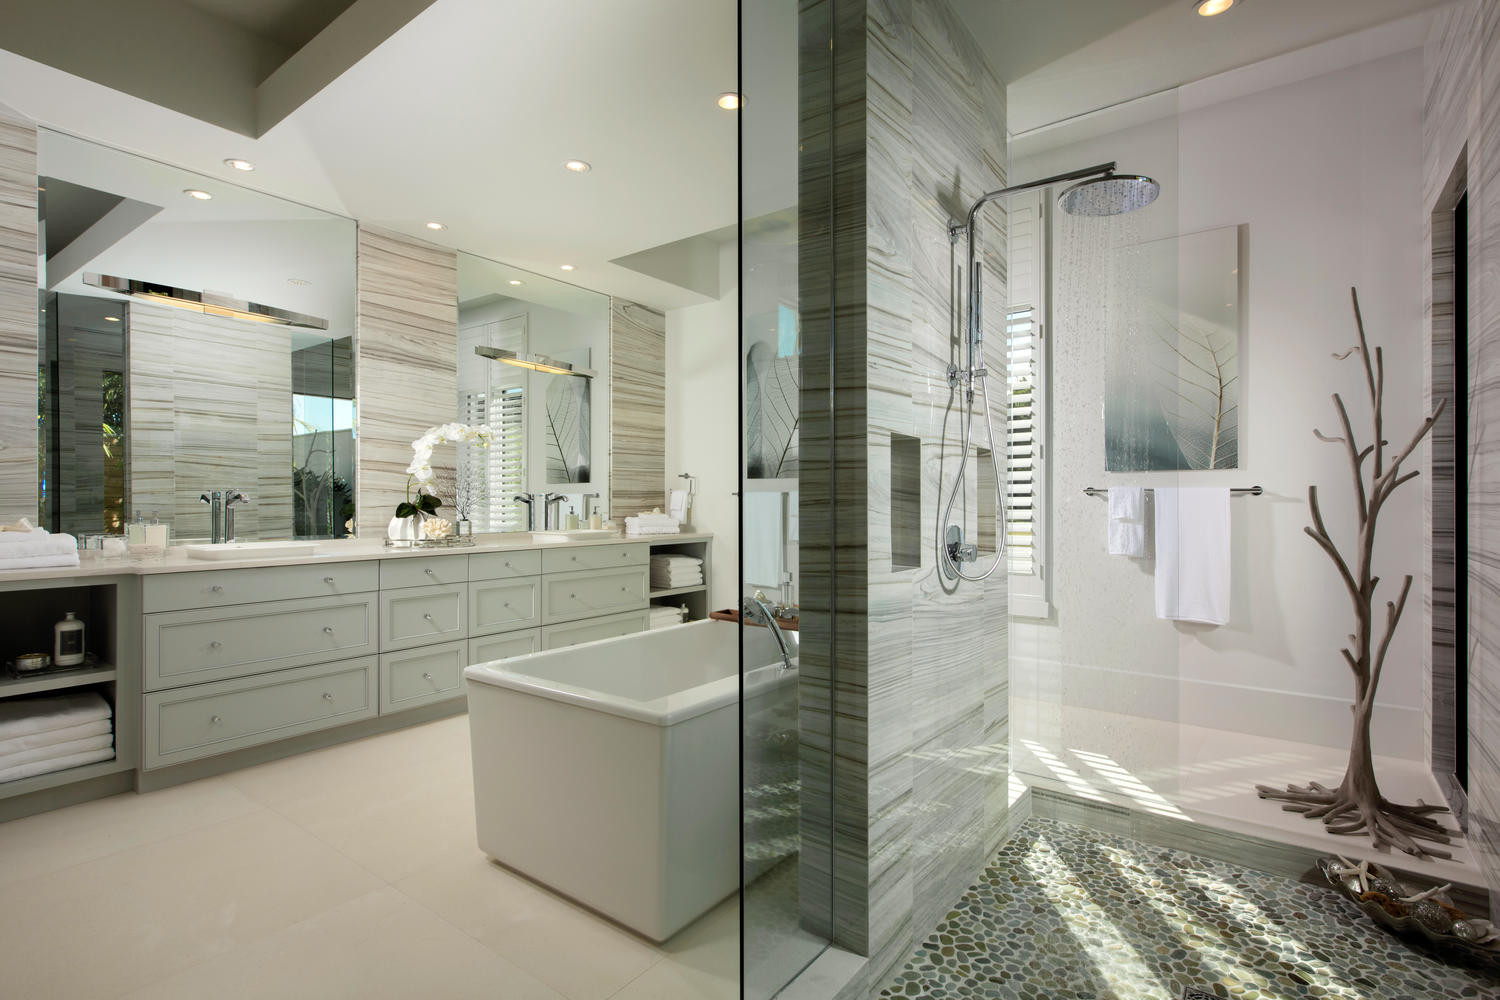 Spa Master Bathroom
 Rejuvenate Your Senses with Luxury Master Bathroom Designs